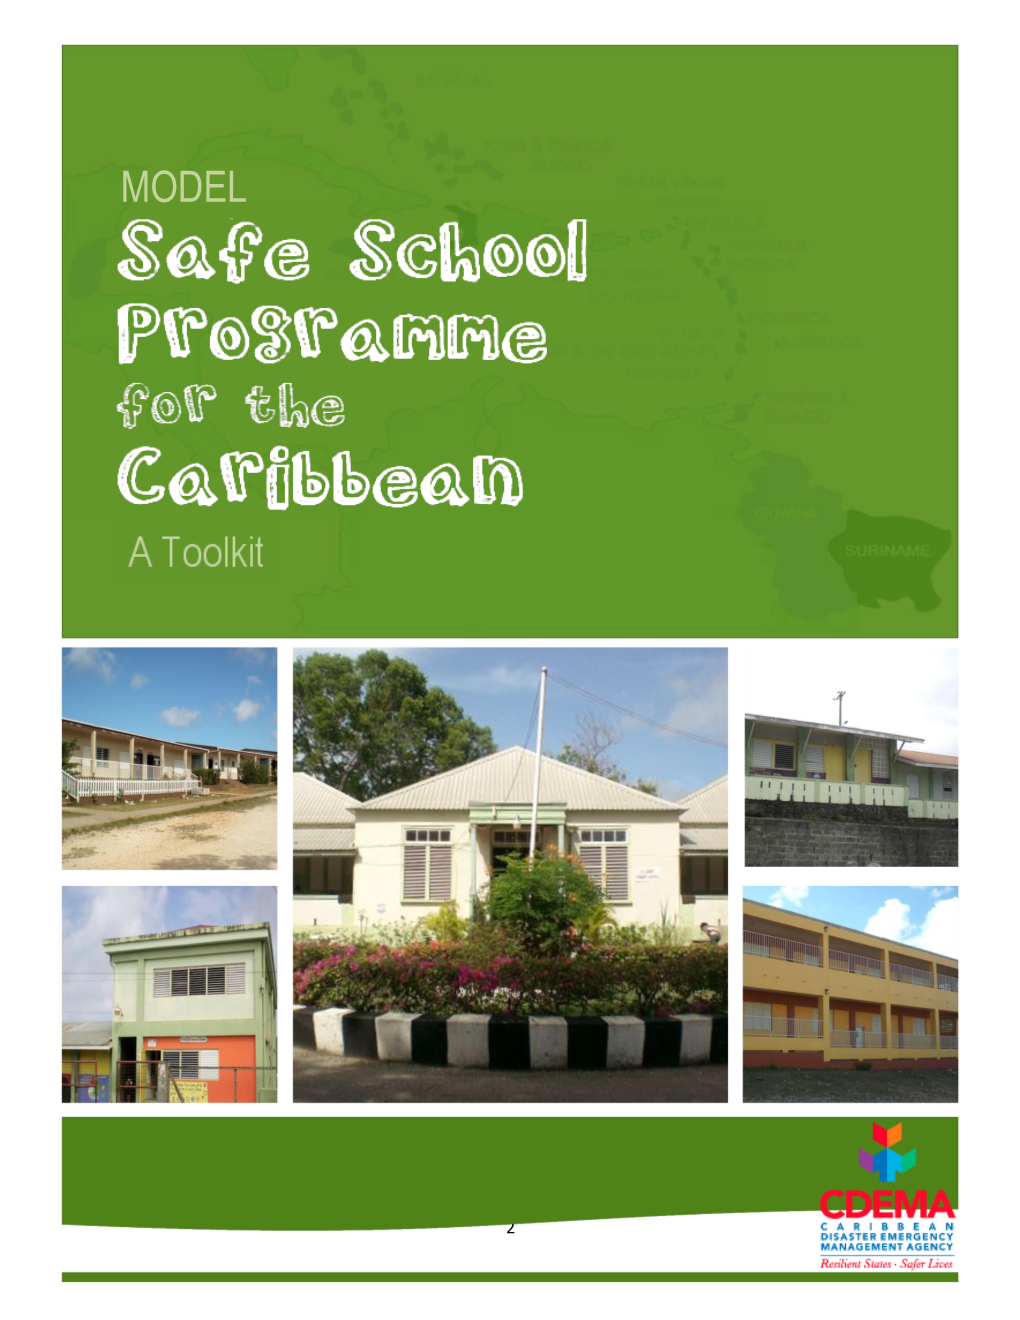 Model Safe School Programme for the Caribbean